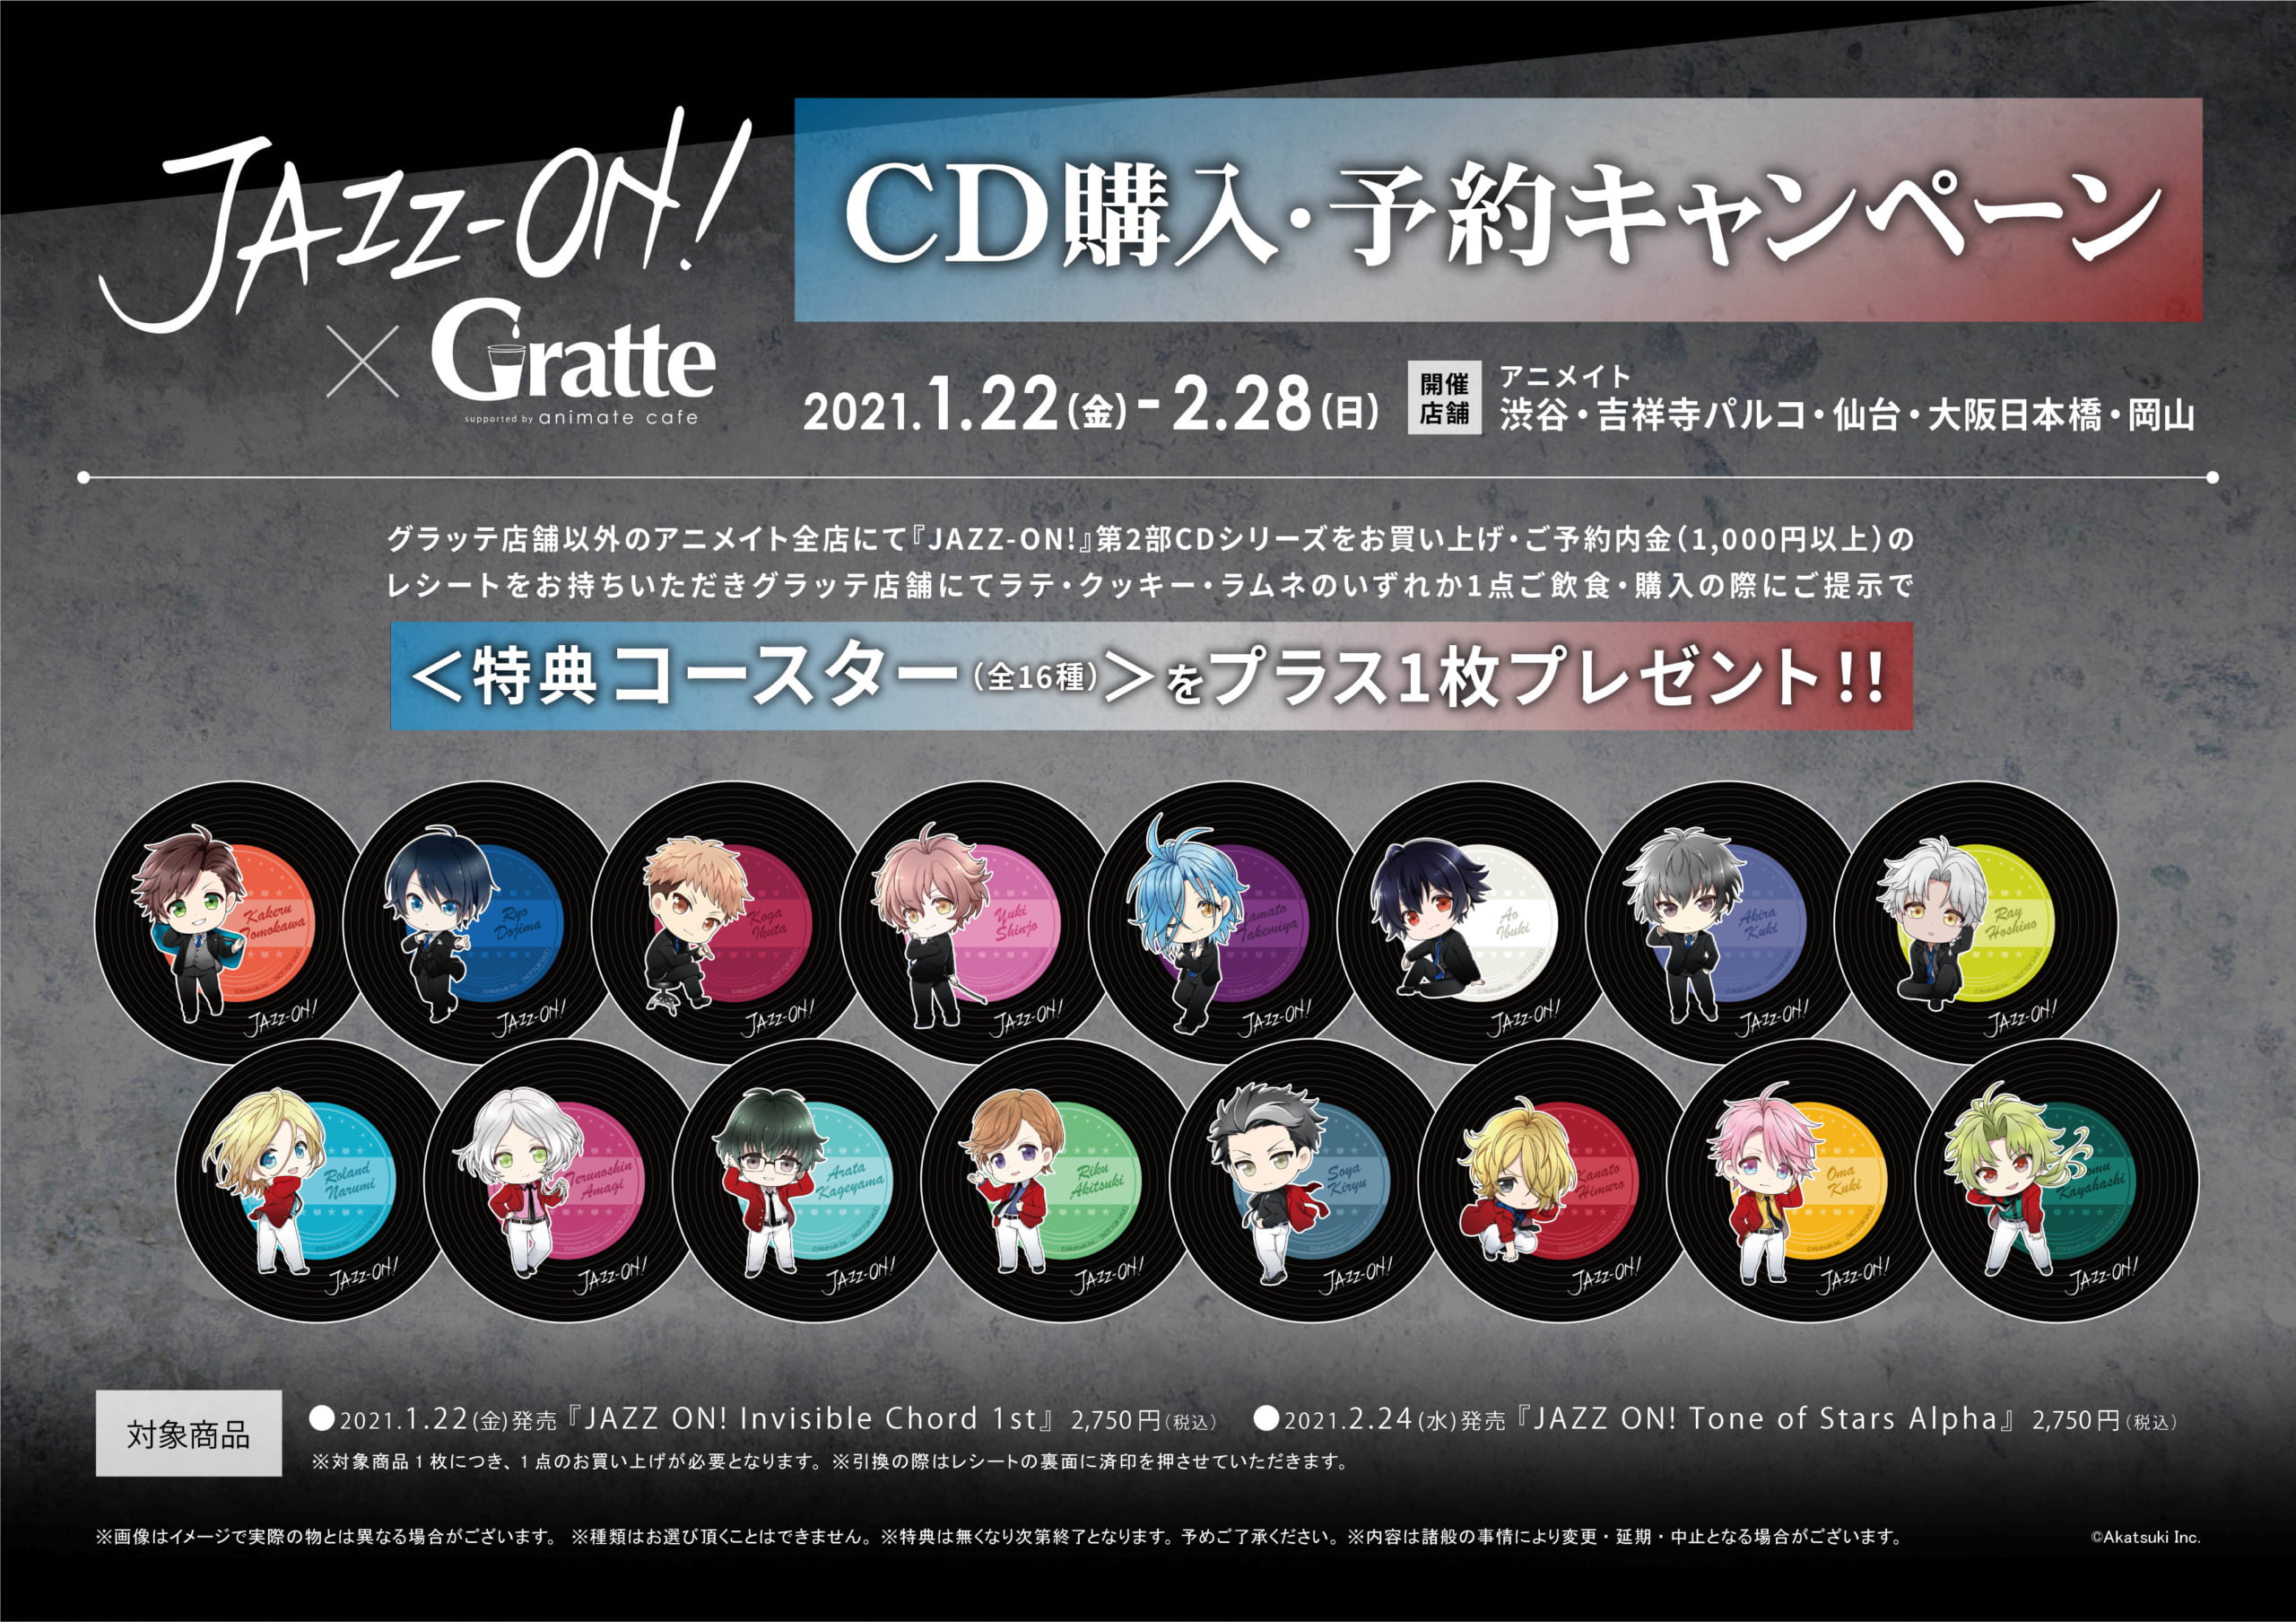 「JAZZ-ON!」×「Gratt」CD購入・予約キャンペーン